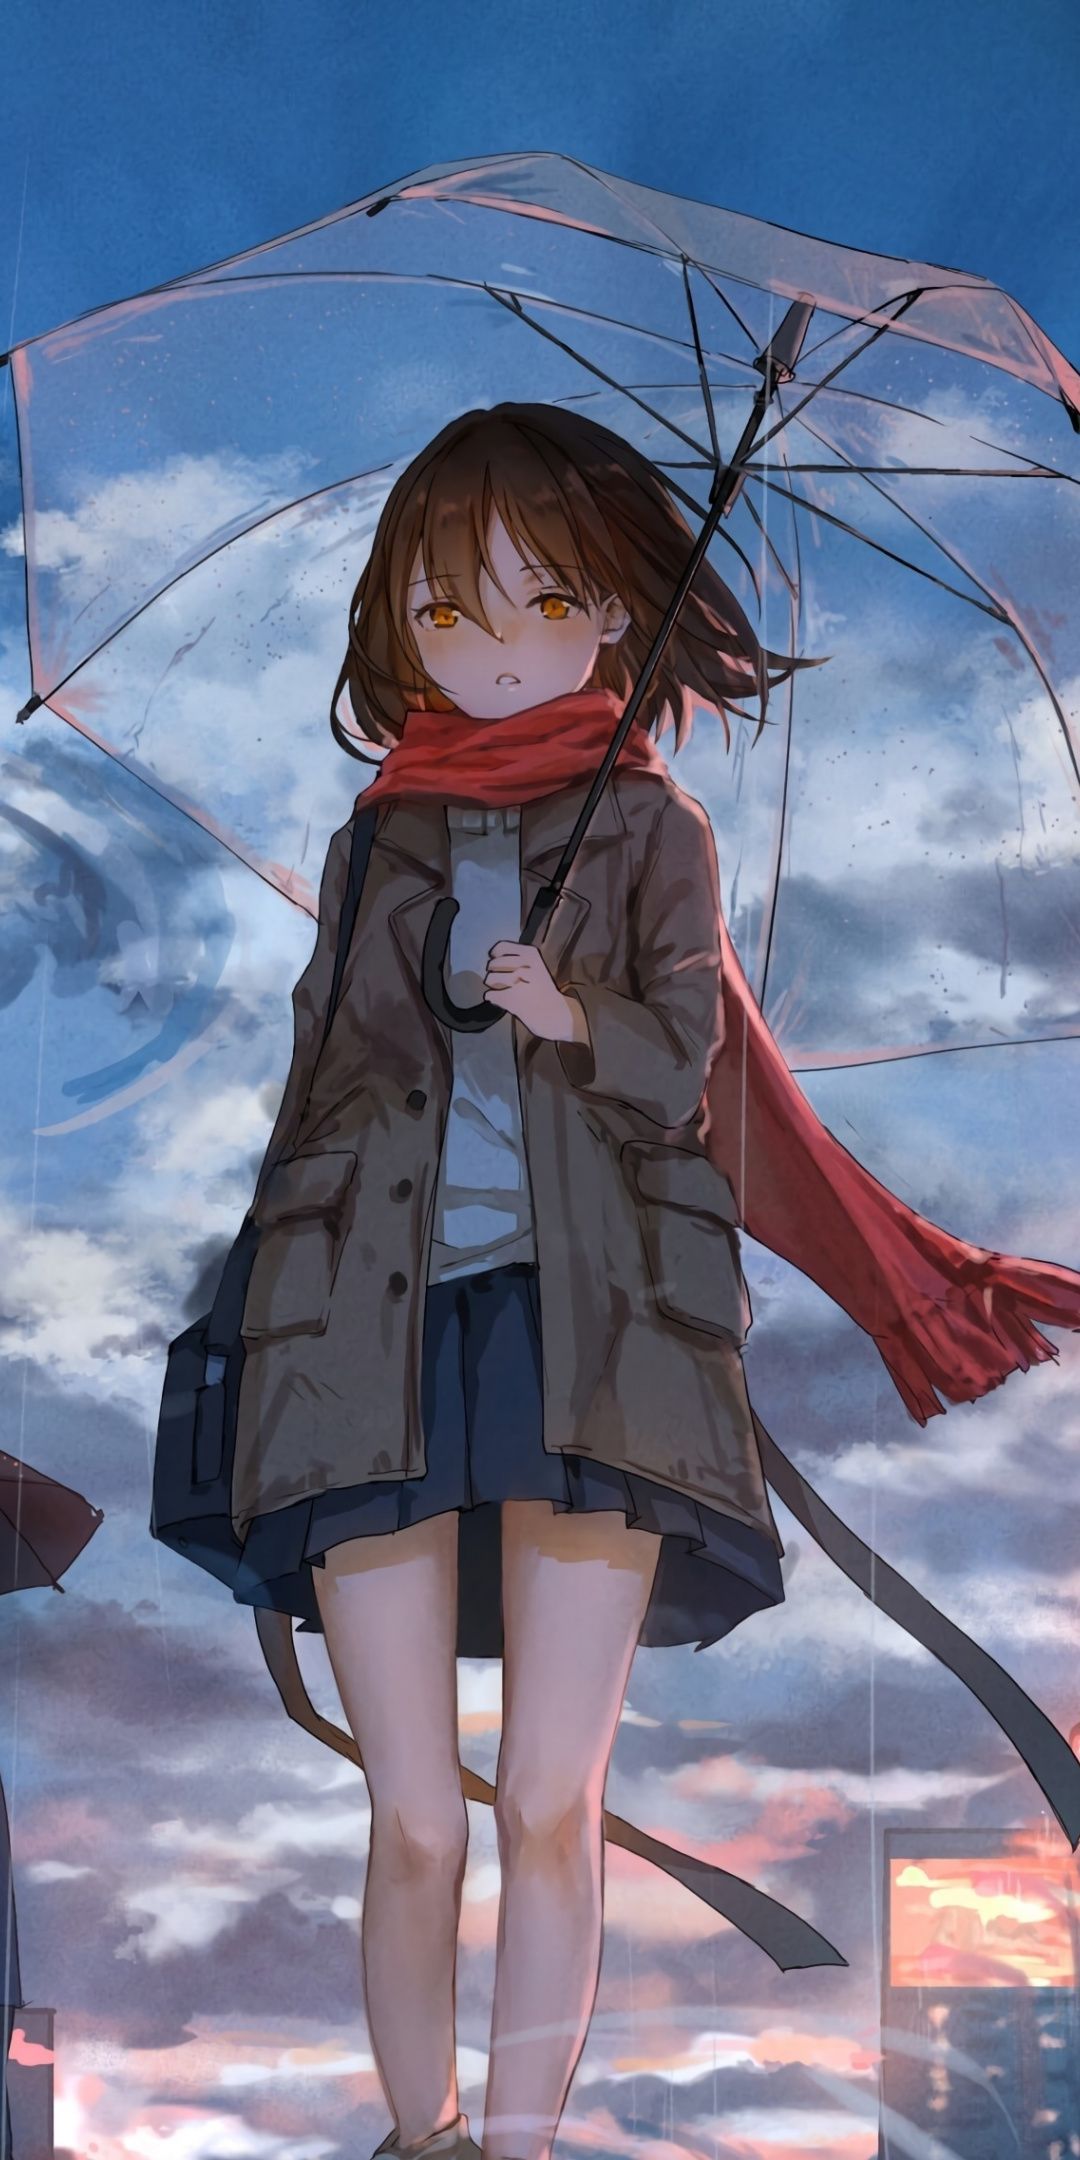 Anime Girl With Umbrella Wallpaper gambar ke 20